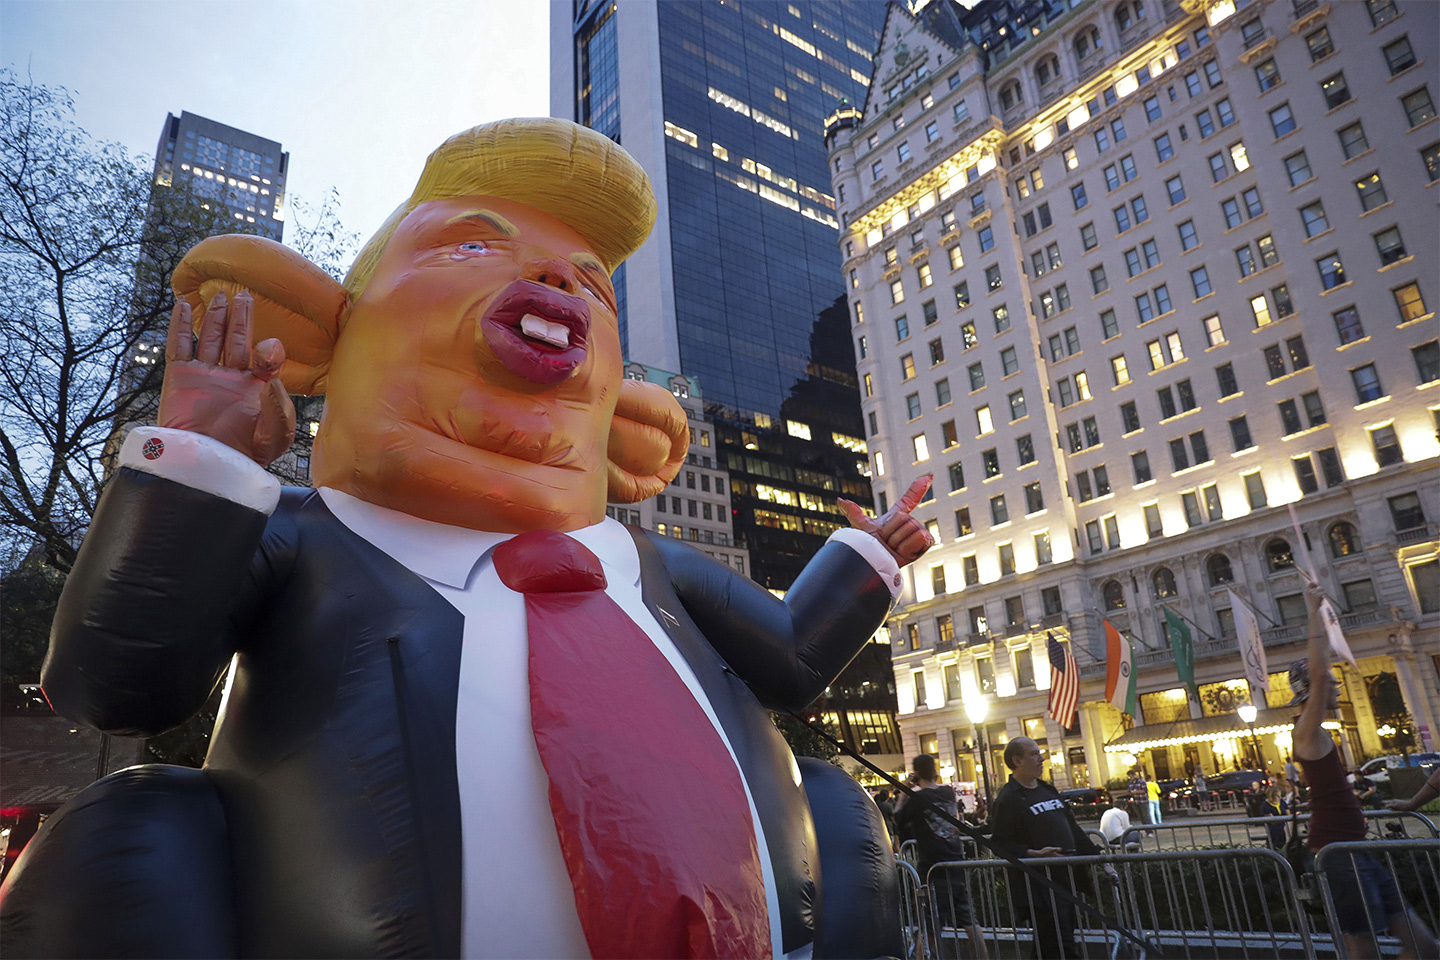 Trump Protest New York City